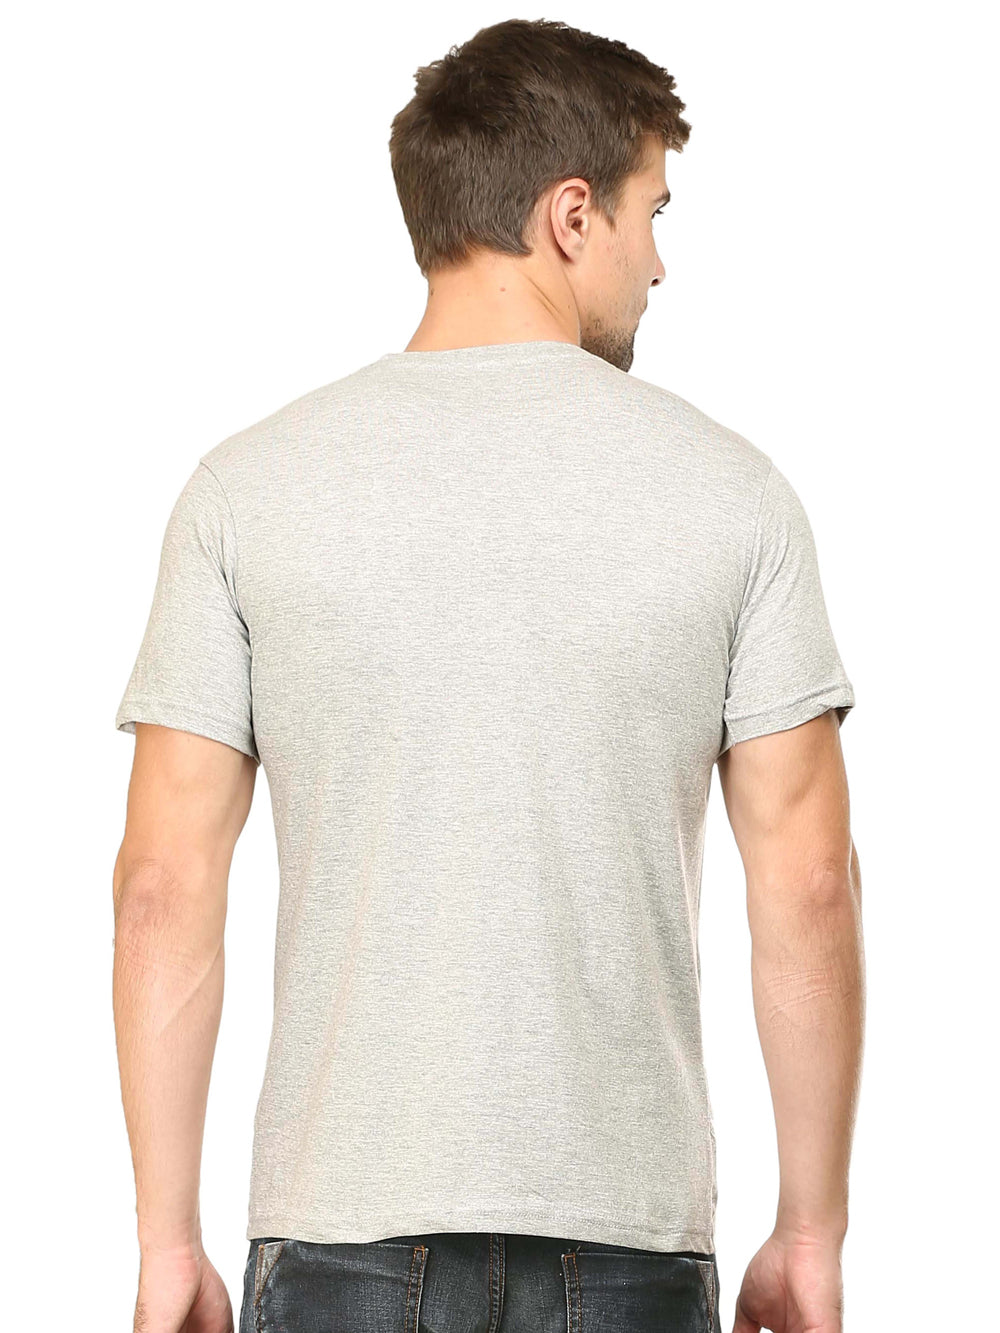 Solids : Premium Grey Melange Unisex T -shirt